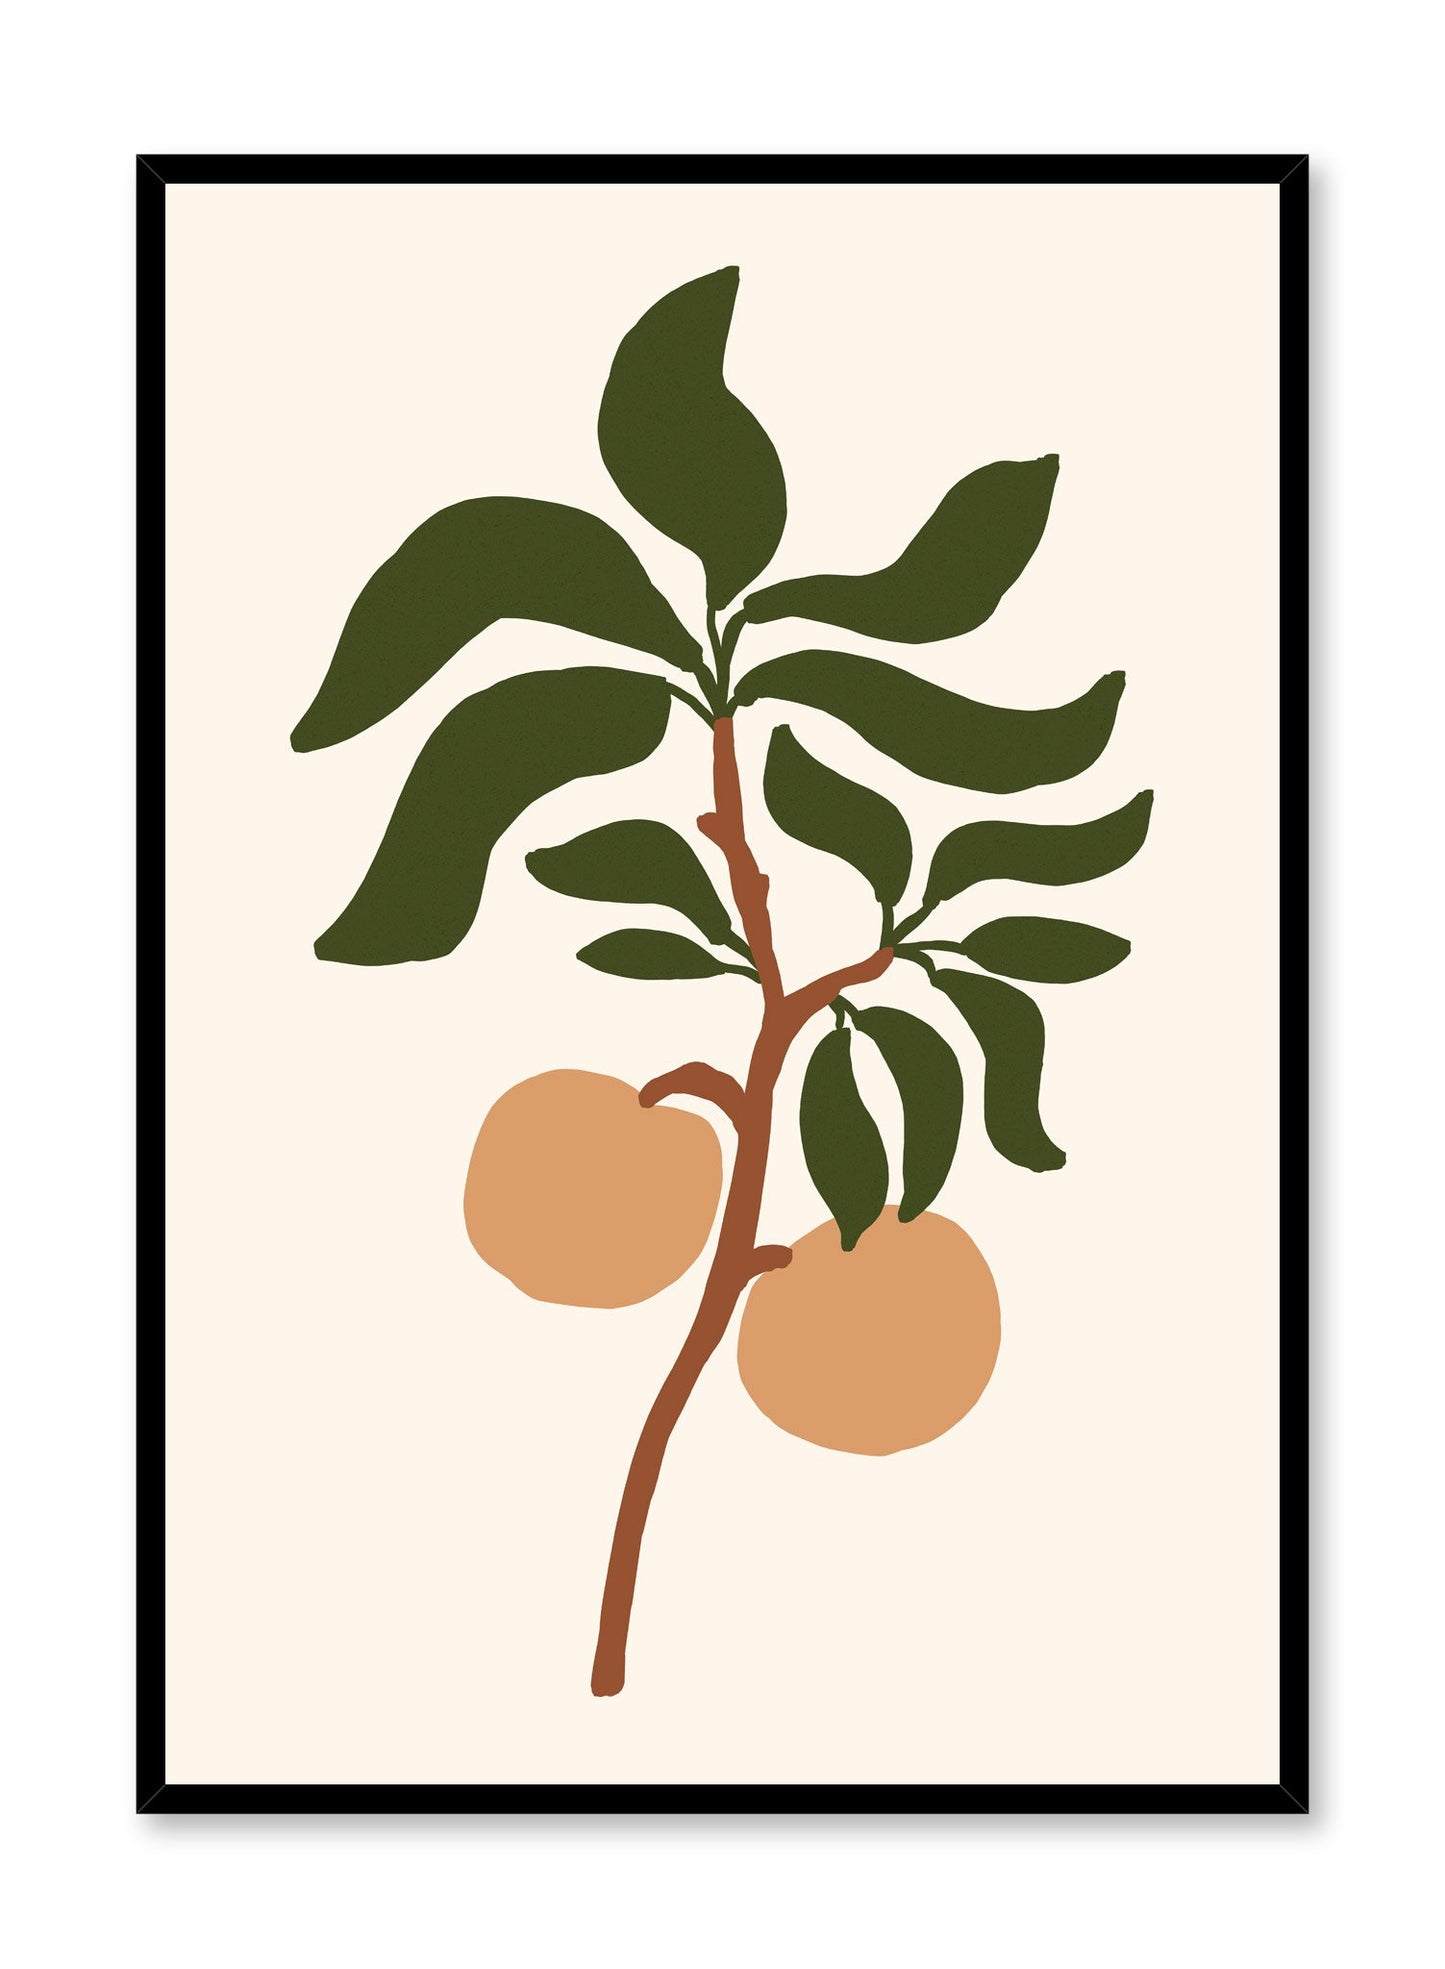 Orange Tree Branch is an orange fruit illustration poster by Opposite Wall.